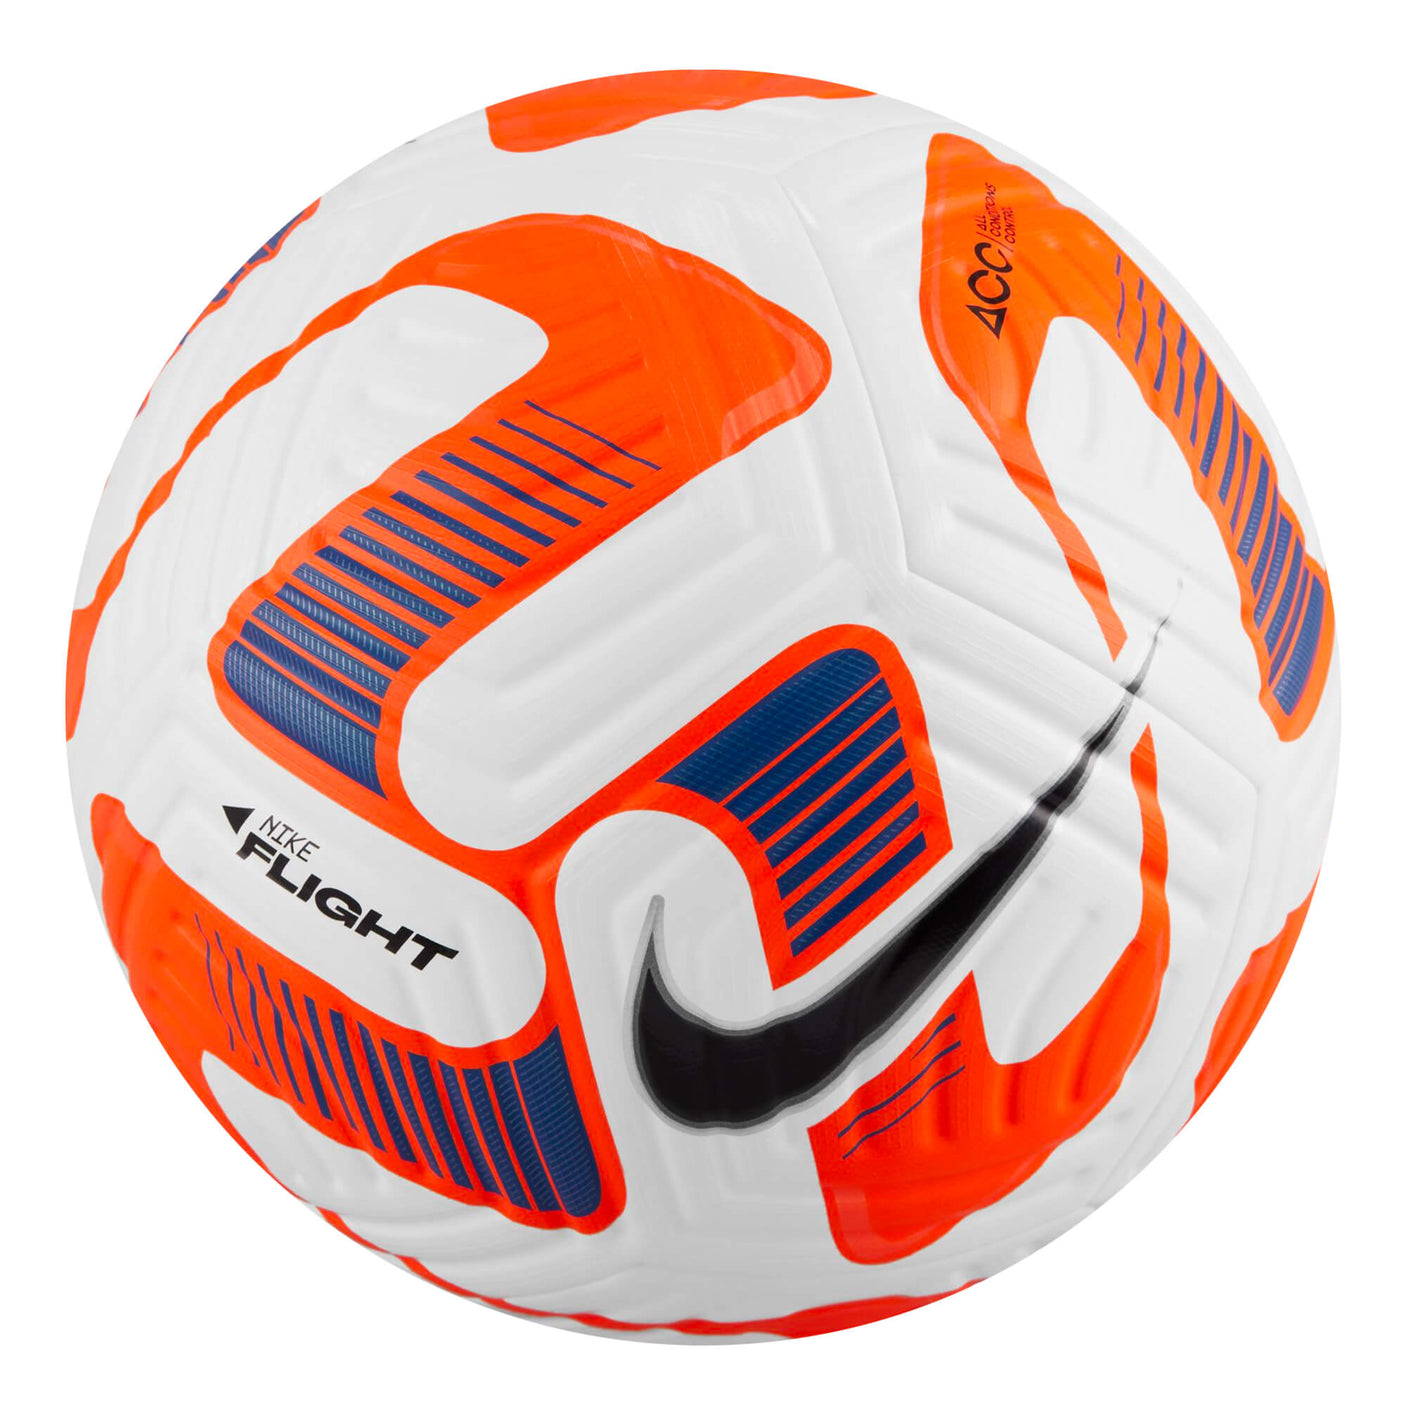 Nike Flight Soccer Ball - 5